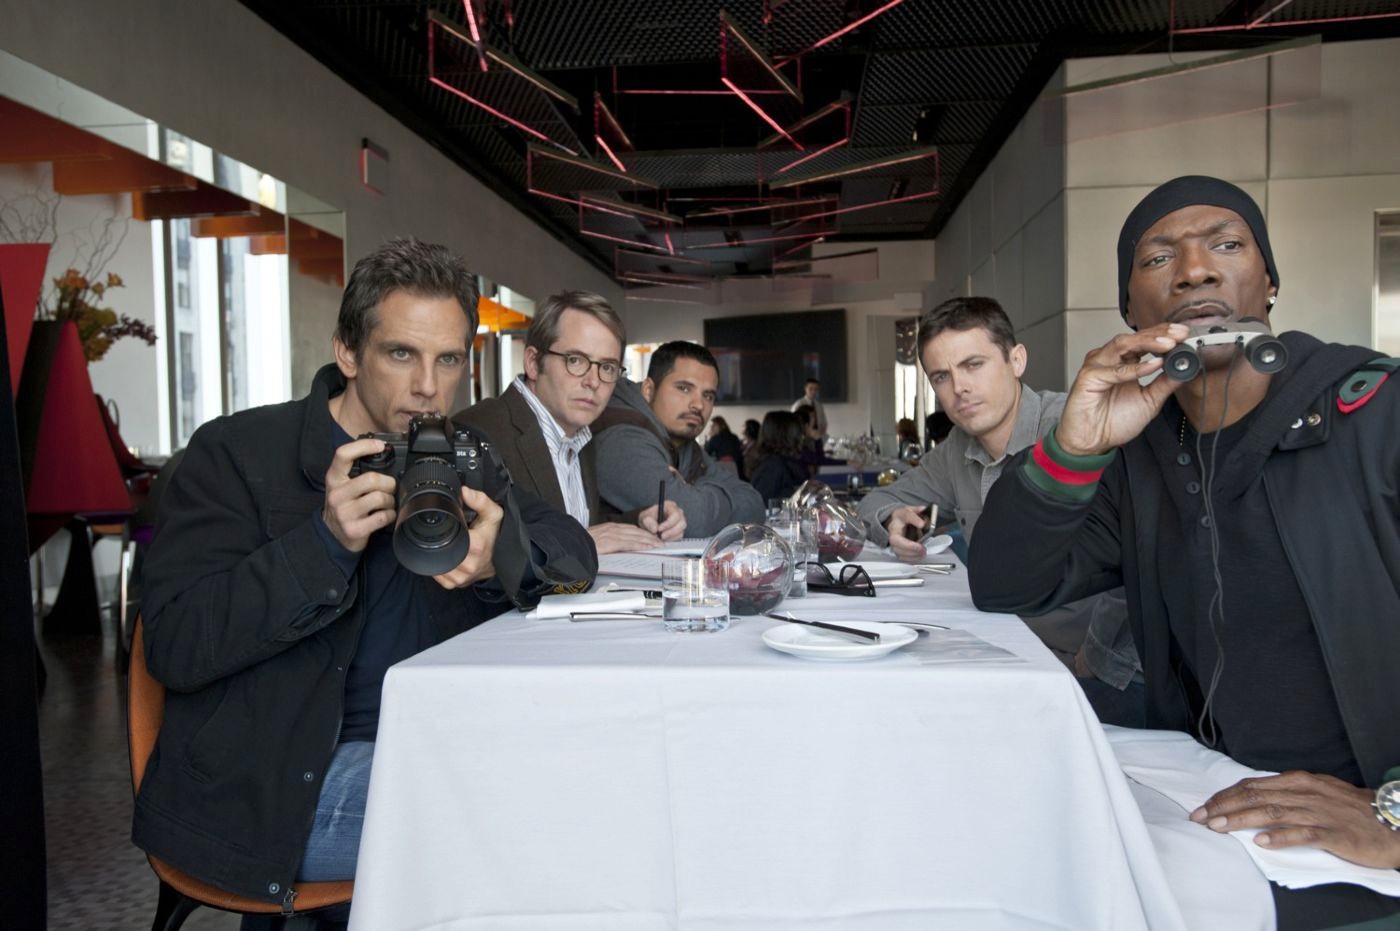 Ben Stiller, Matthew Broderick, Michael Pena, Casey Affleck and Eddie Murphy in Universal Pictures' Tower Heist (2011)